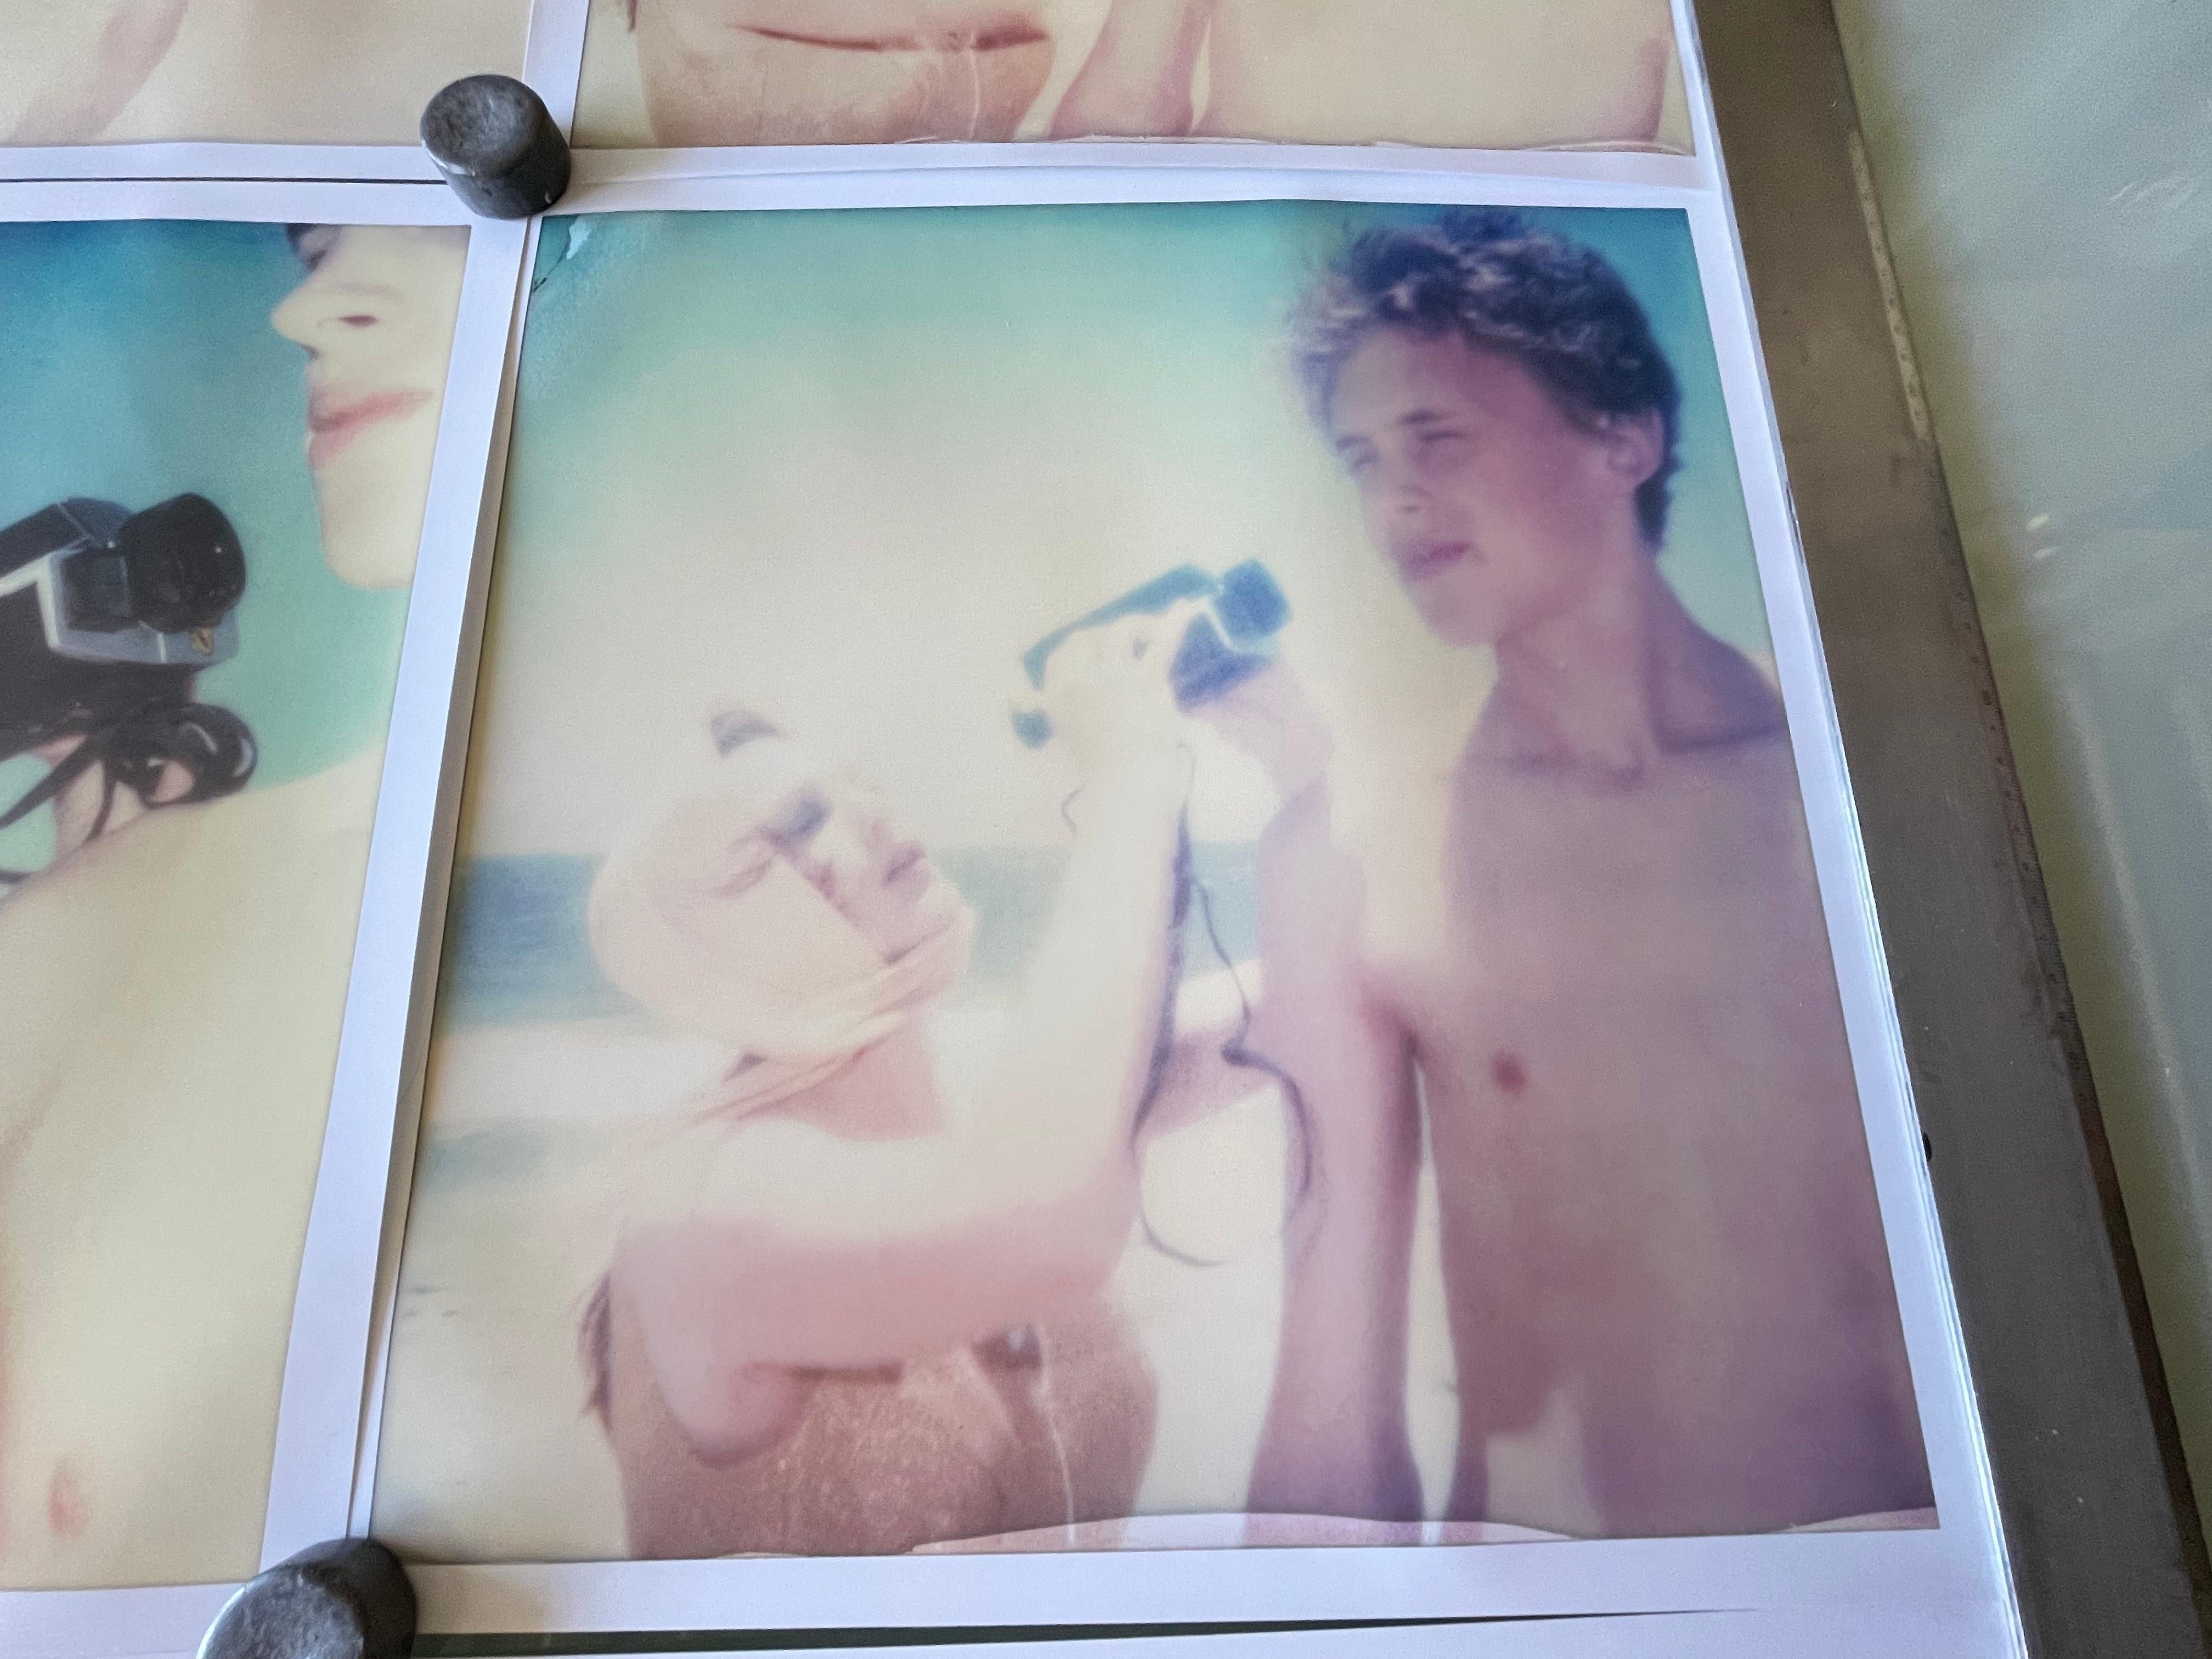 The Diva and the Boy (Beachshoot) - 9 pieces - Polaroid, Vintage, Contemporary 5